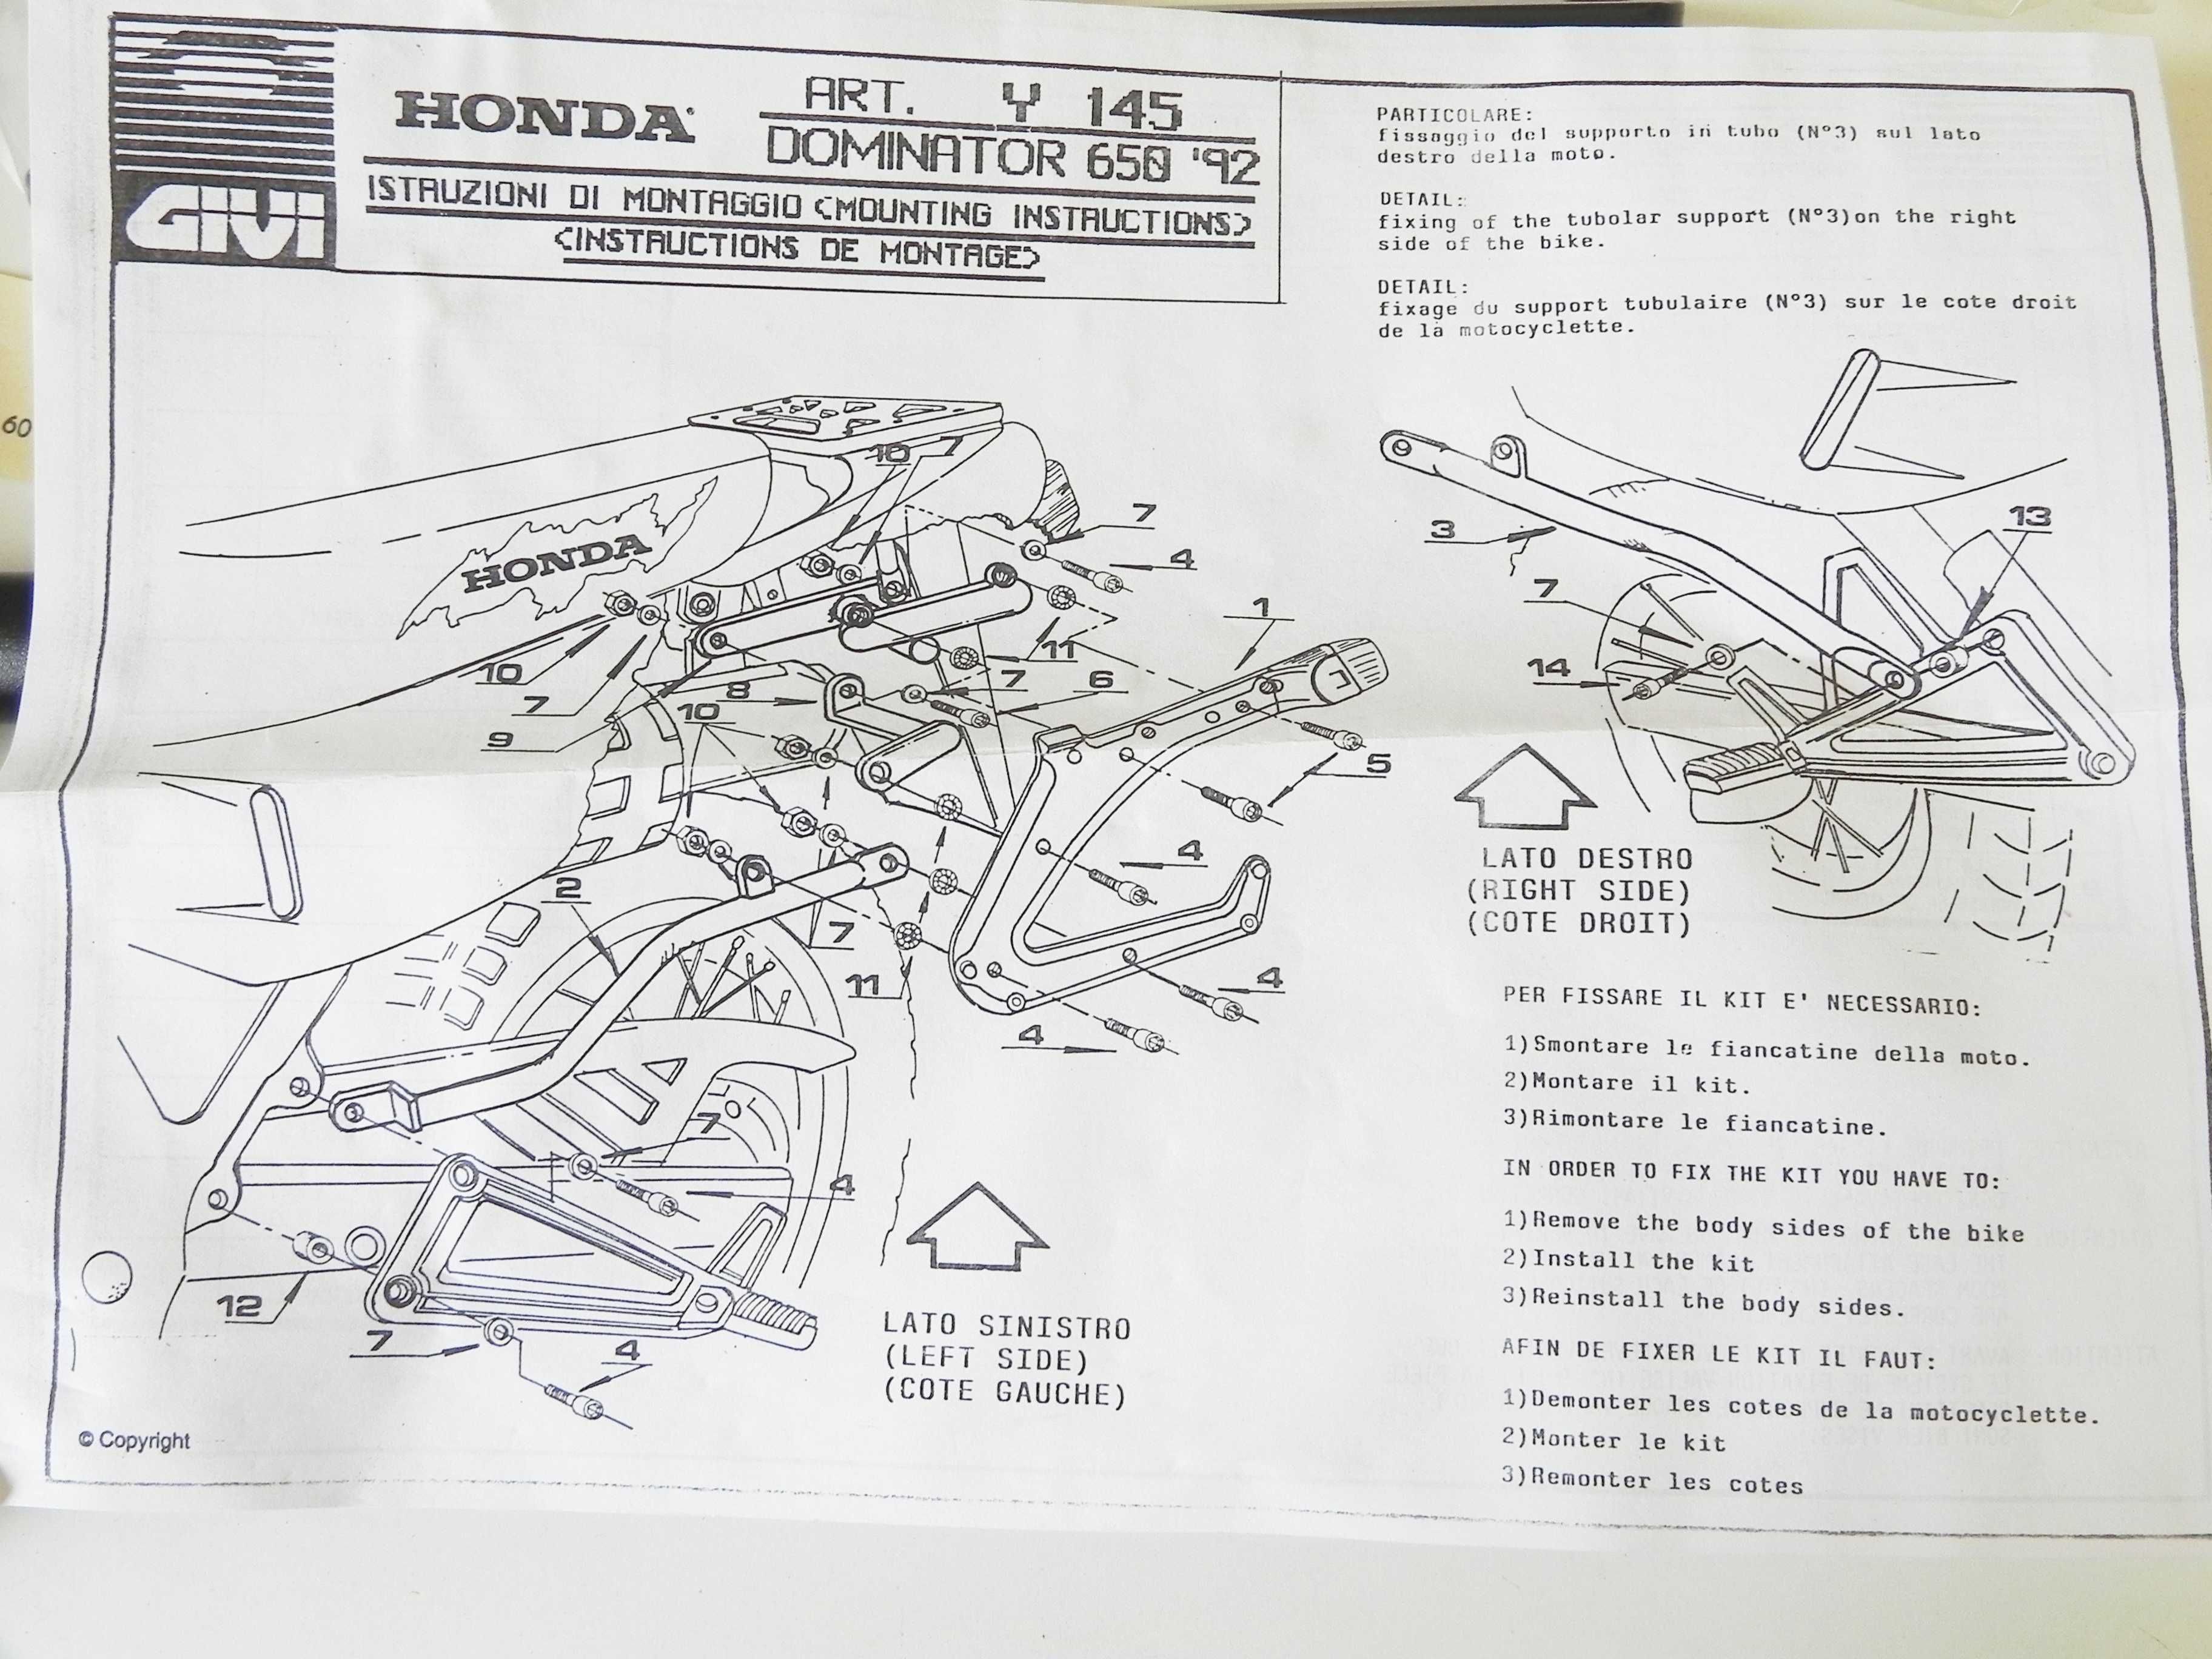 Stelaż mocowanie Wingrack GIVI Y145 Honda Dominator 650